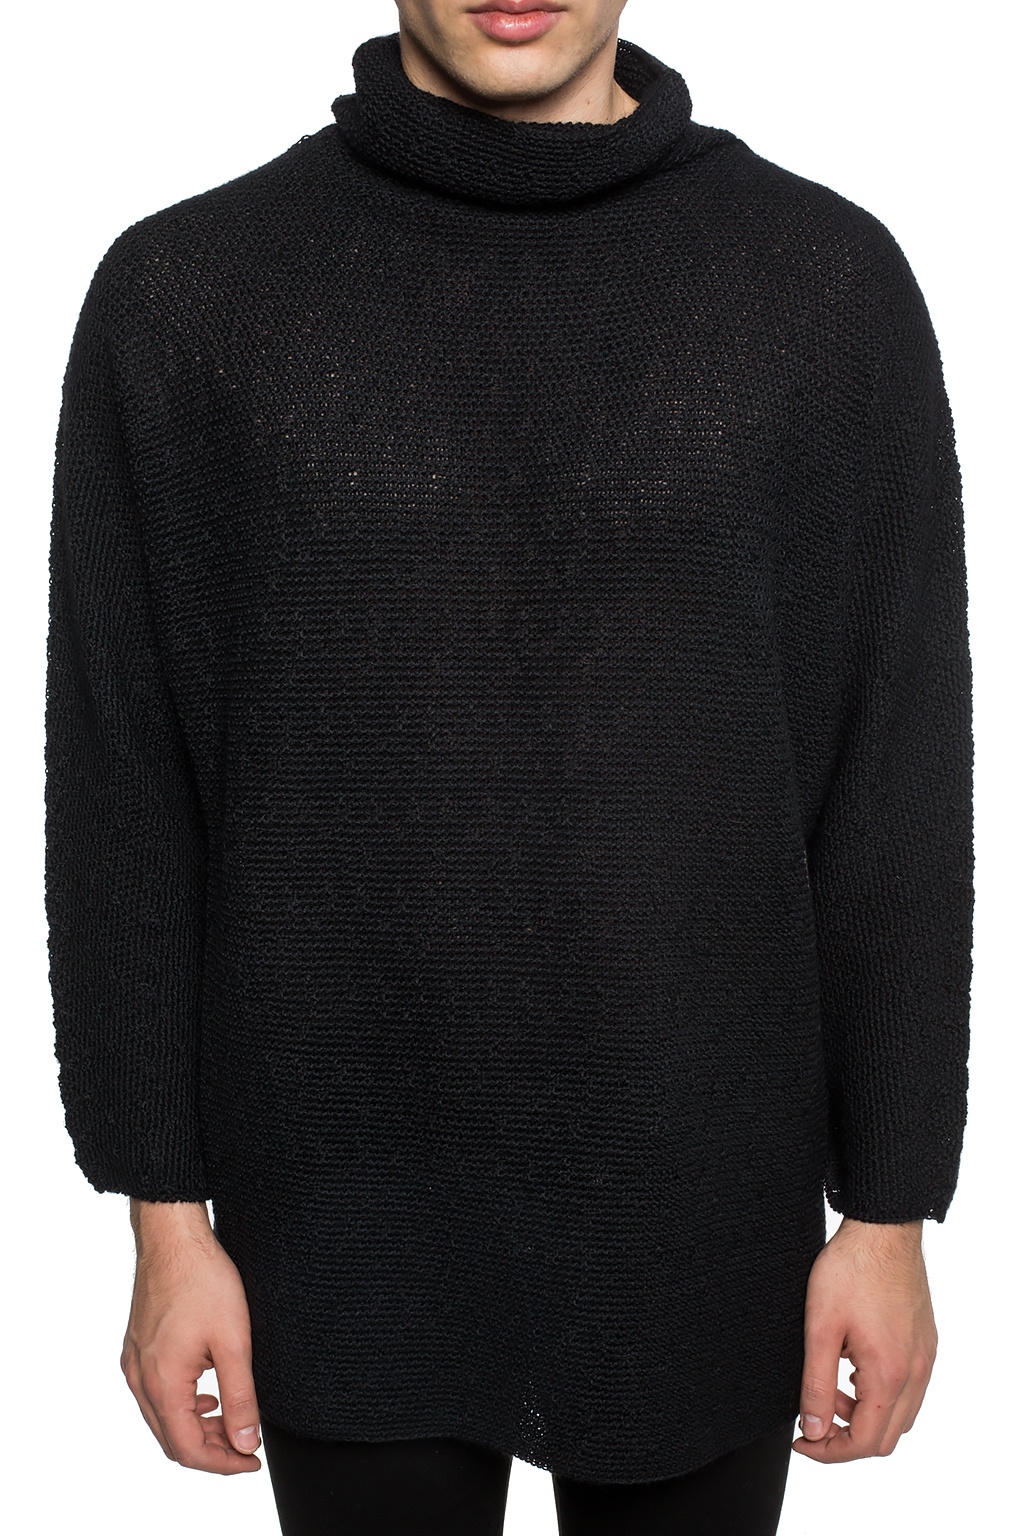 Issey Miyake Homme Plisse Textured turtleneck sweater | Men's Clothing ...